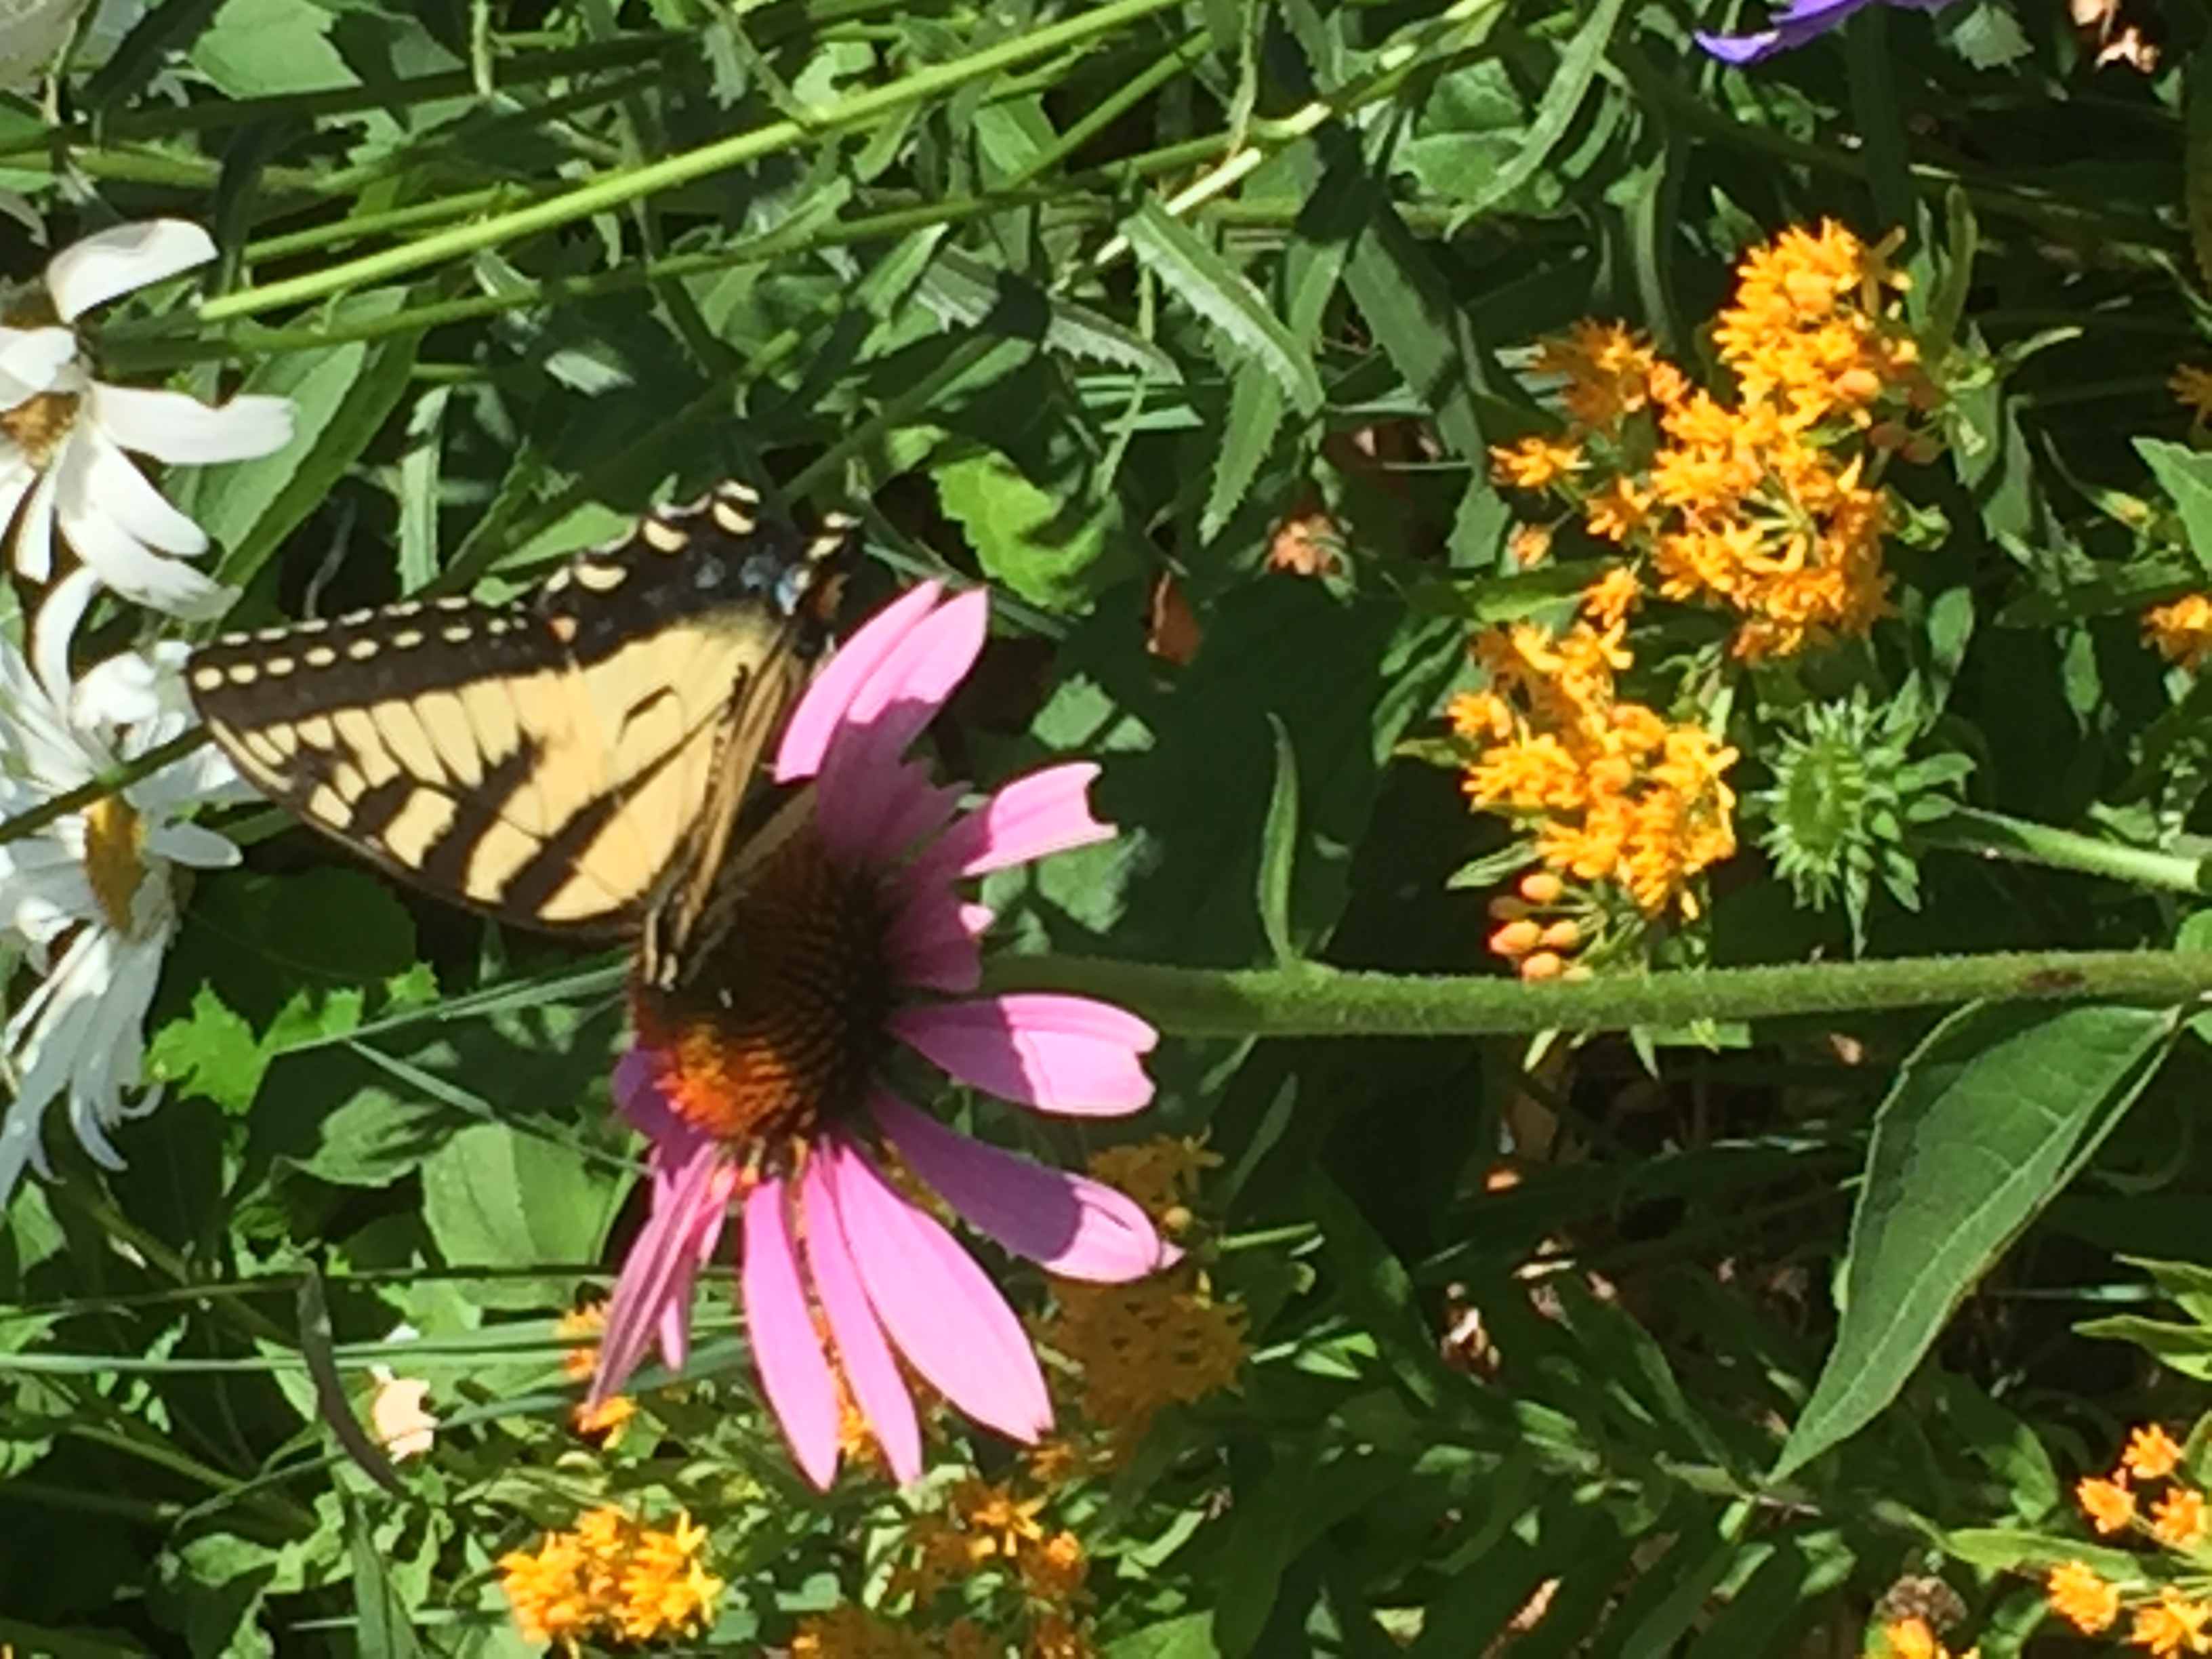 My pollinator garden